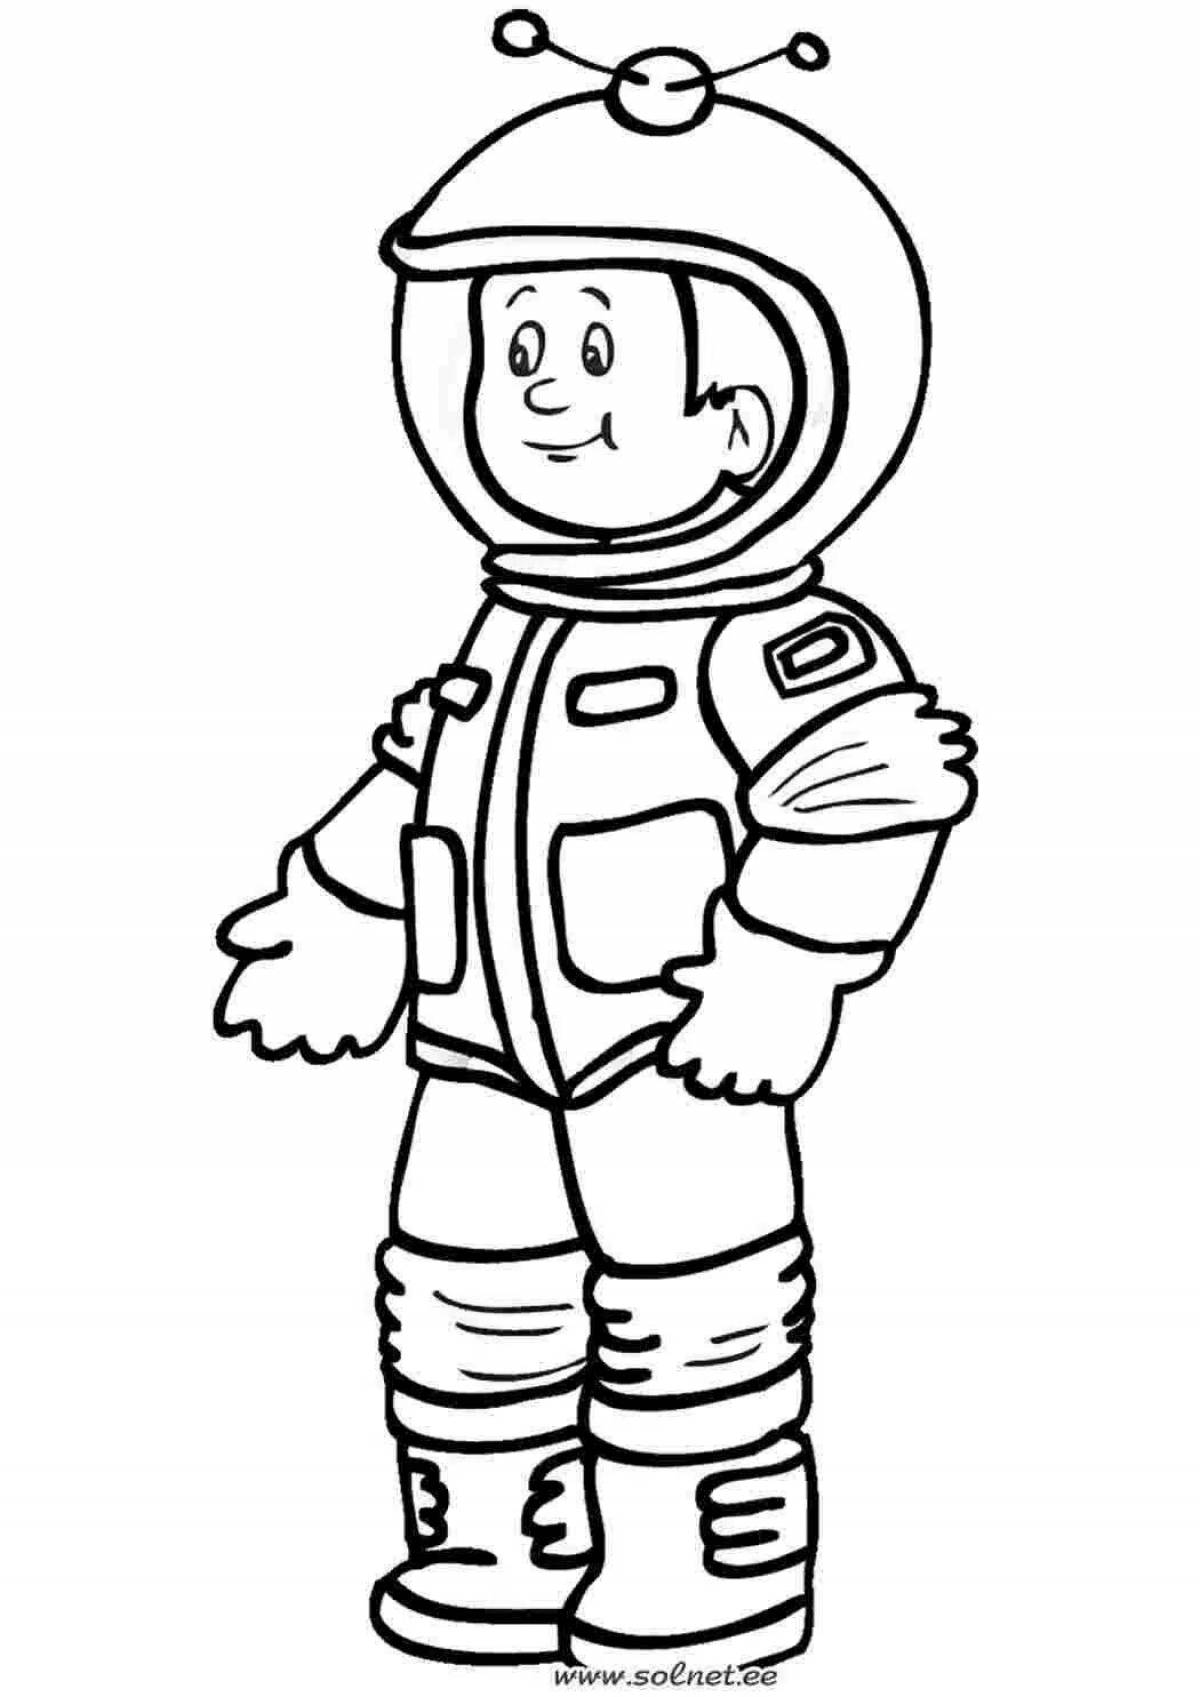 Bright astronaut in space suit